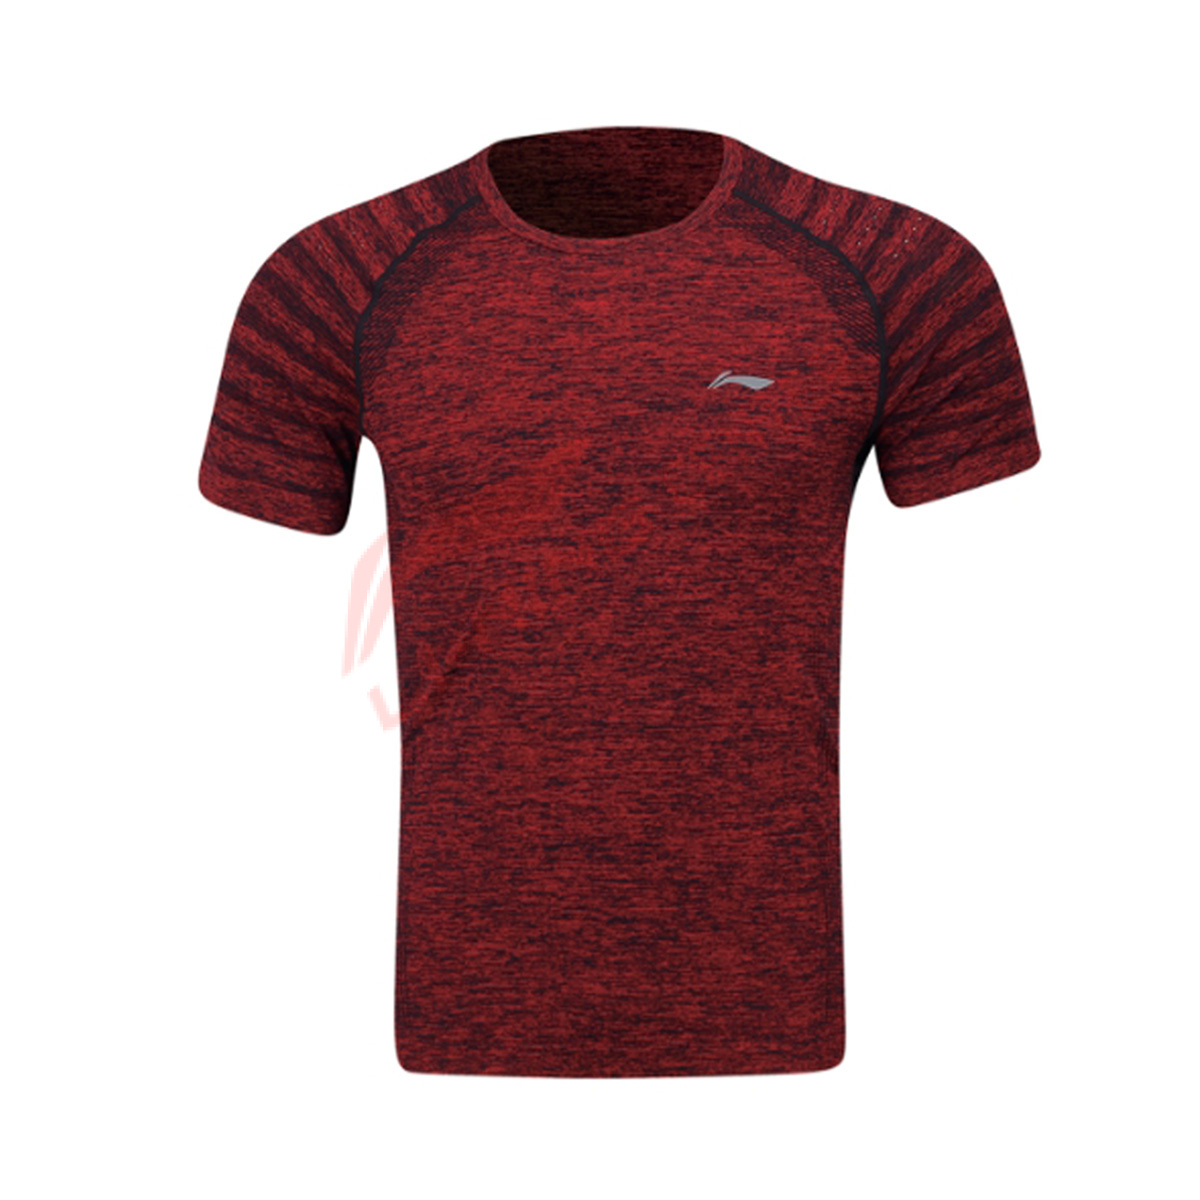 Мужская футболка LI-NING ATSP145 RED (размеры: L)